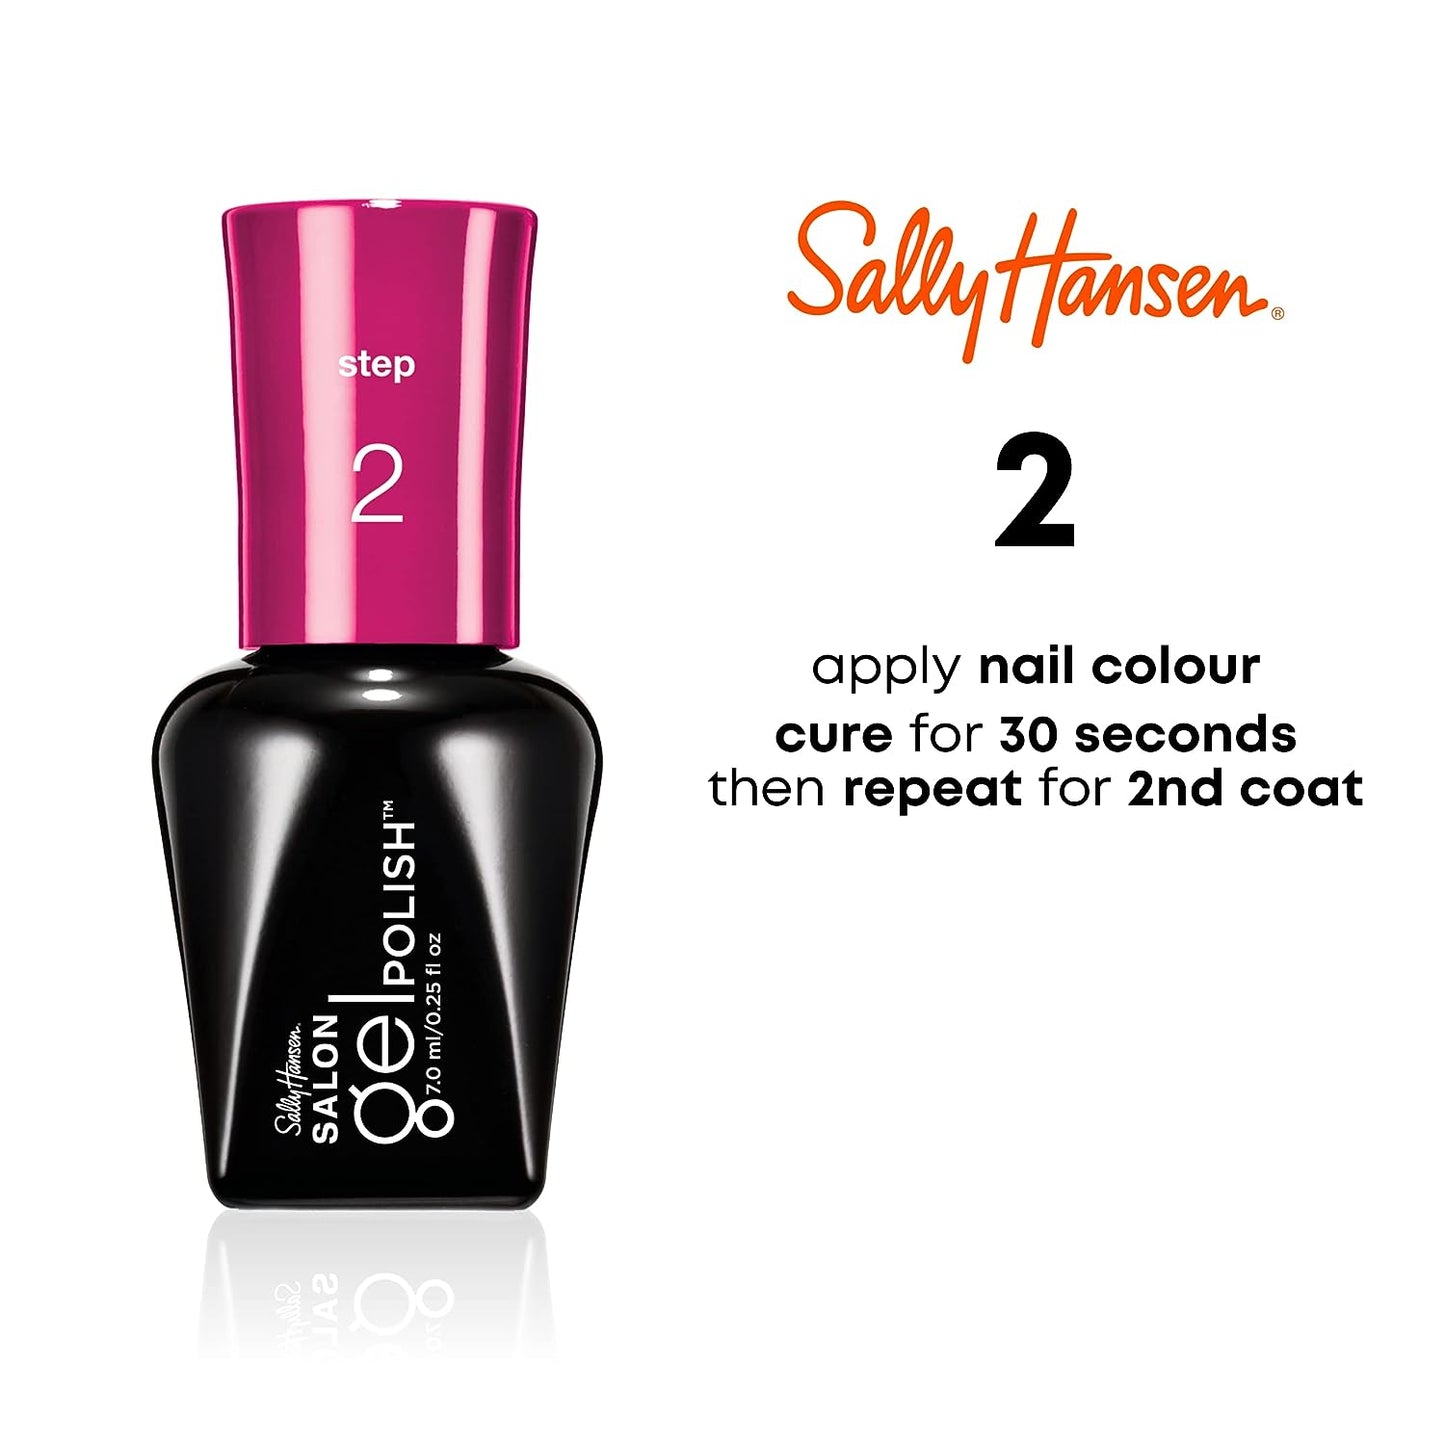 Sally Hansen Salon Gel Polish Nail Lacquer, Red My Lips, 0.14 Fl Oz